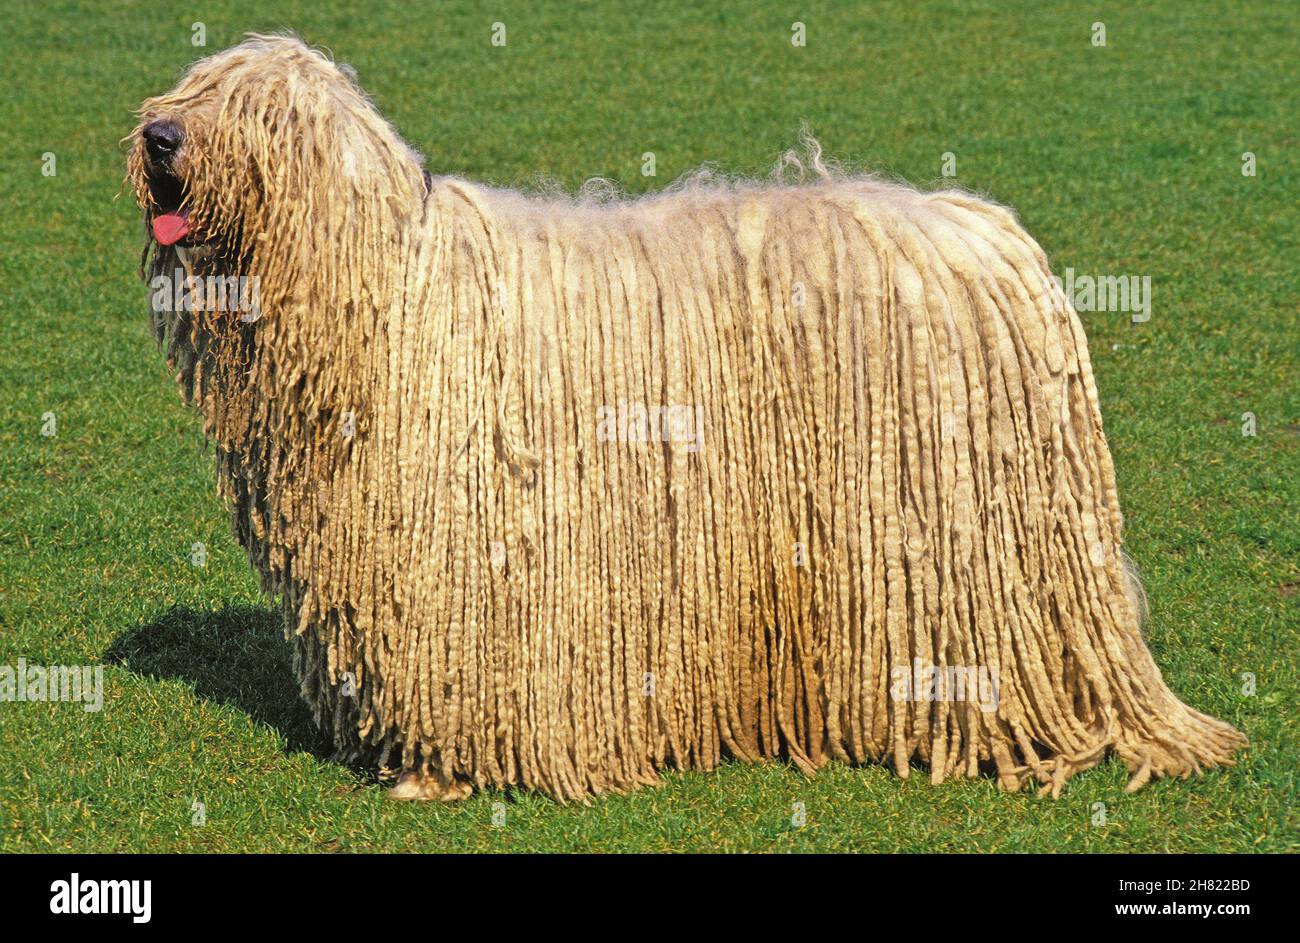 KOMONDOR DOG, ADULT ON GRASS Stock Photo